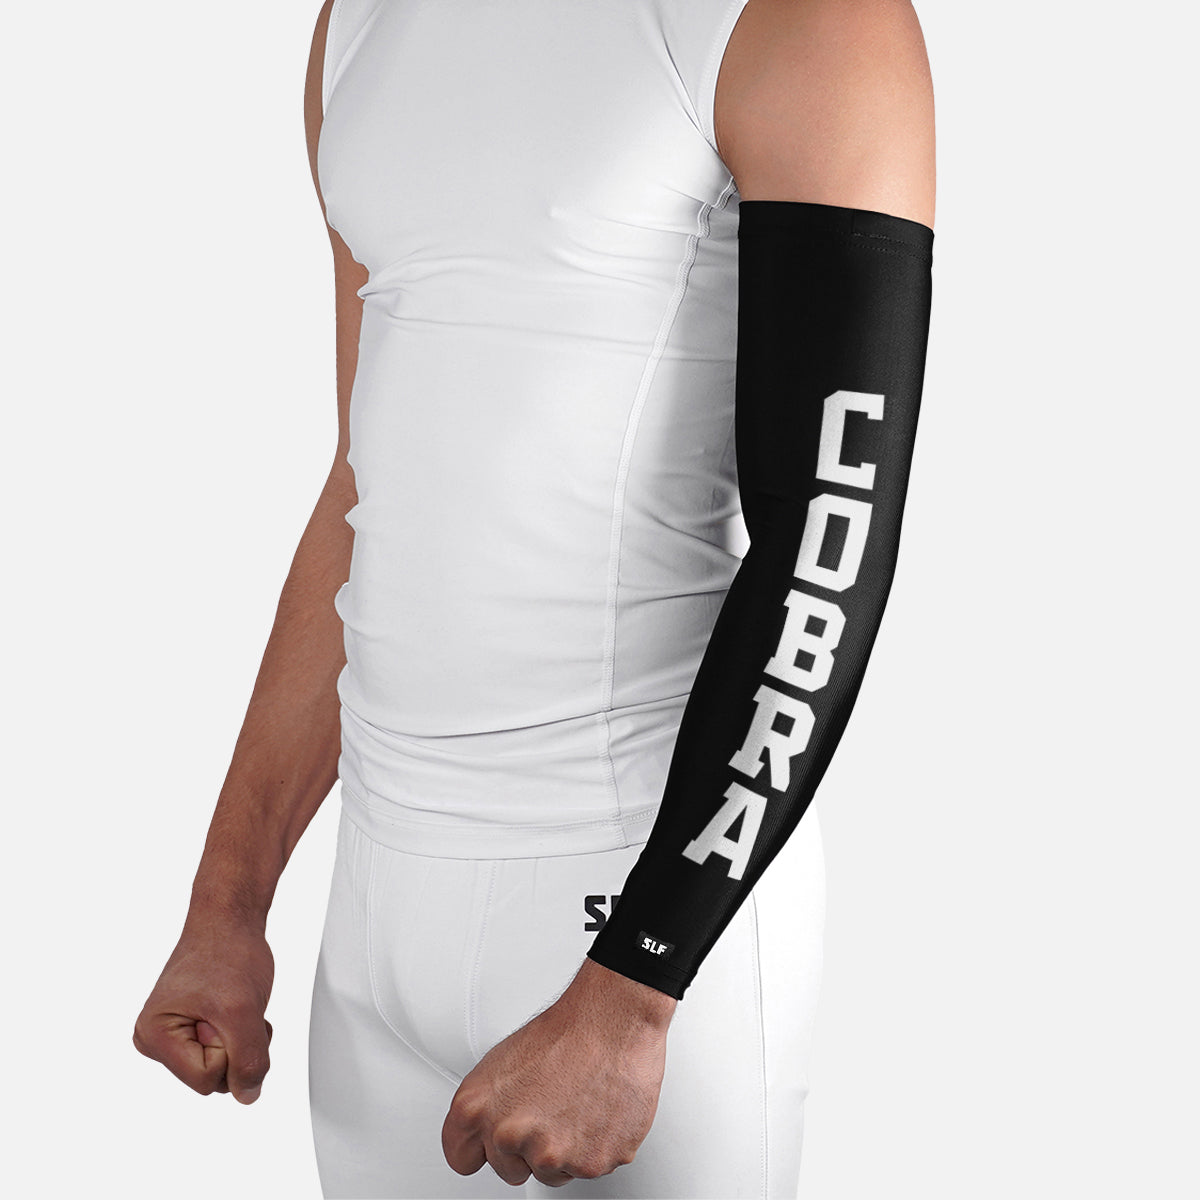 Cobra Arm Sleeve